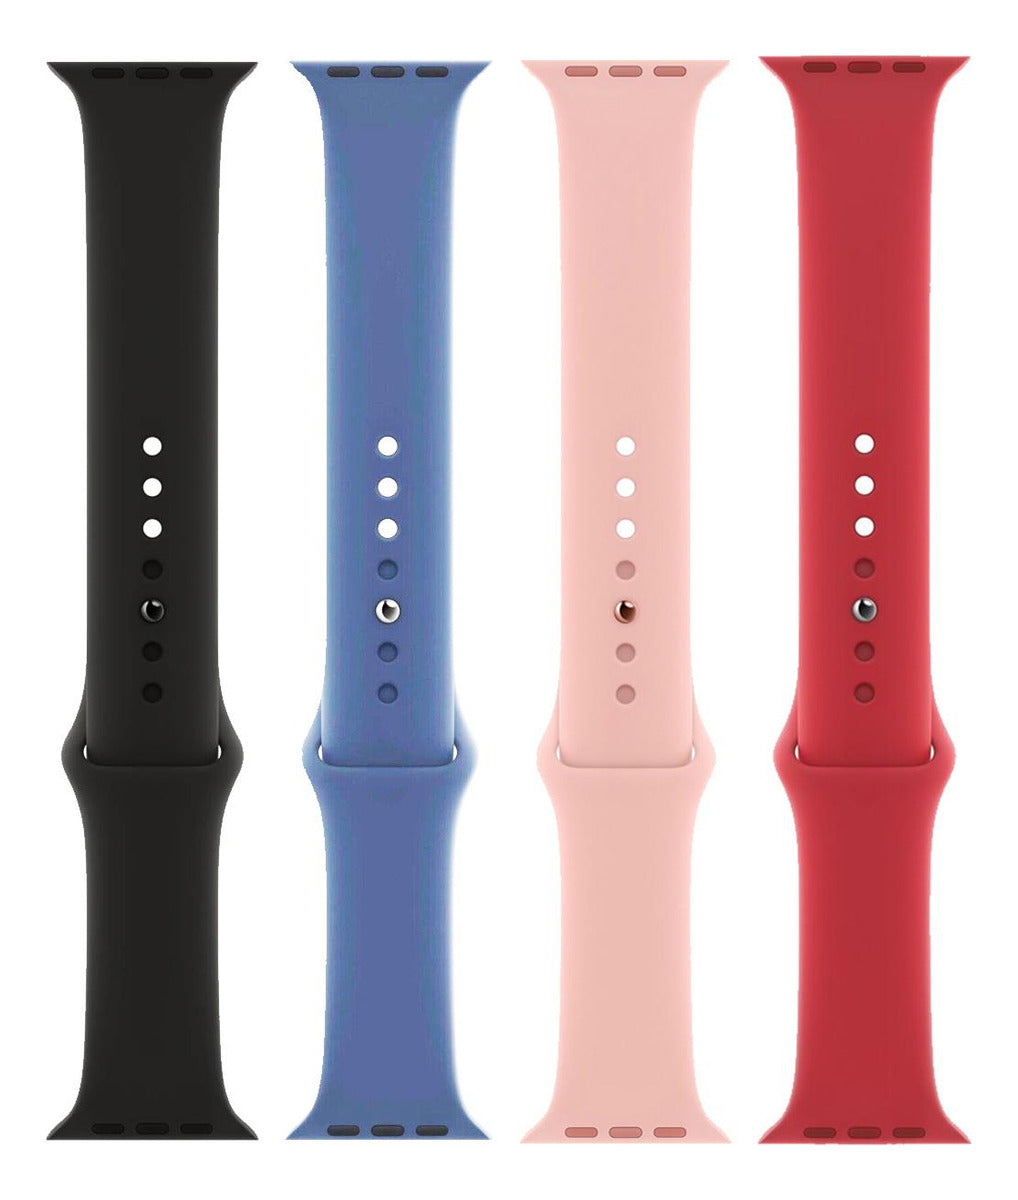 Correa Silicona Compatible Apple Watch Extensible Liso